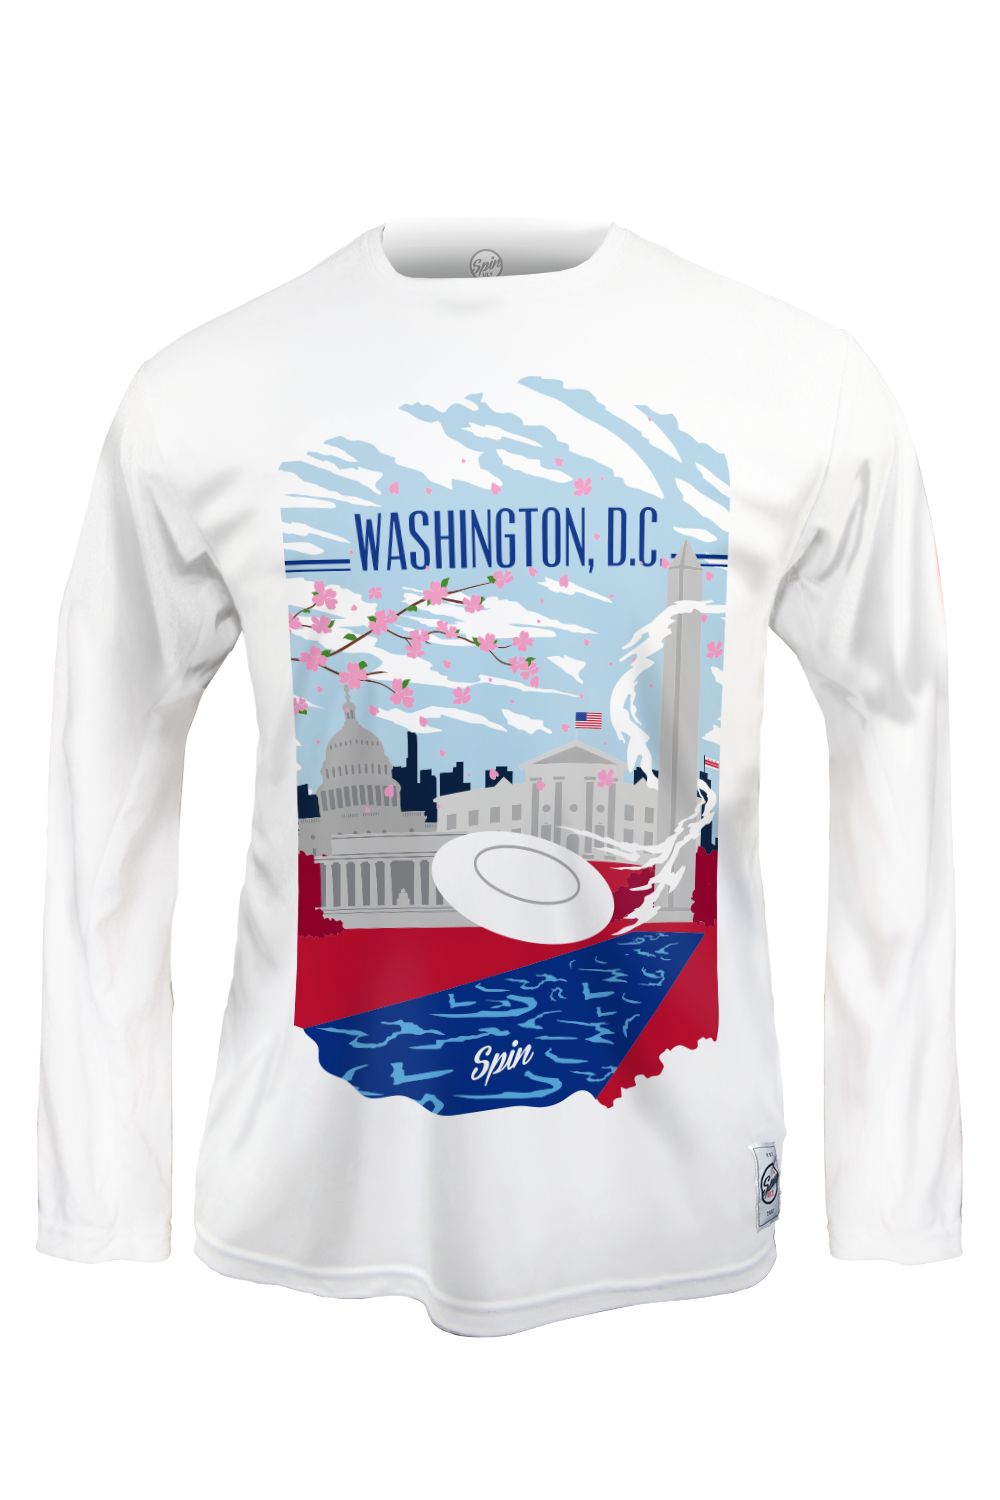 Washington D.C. Long Sleeve Jersey